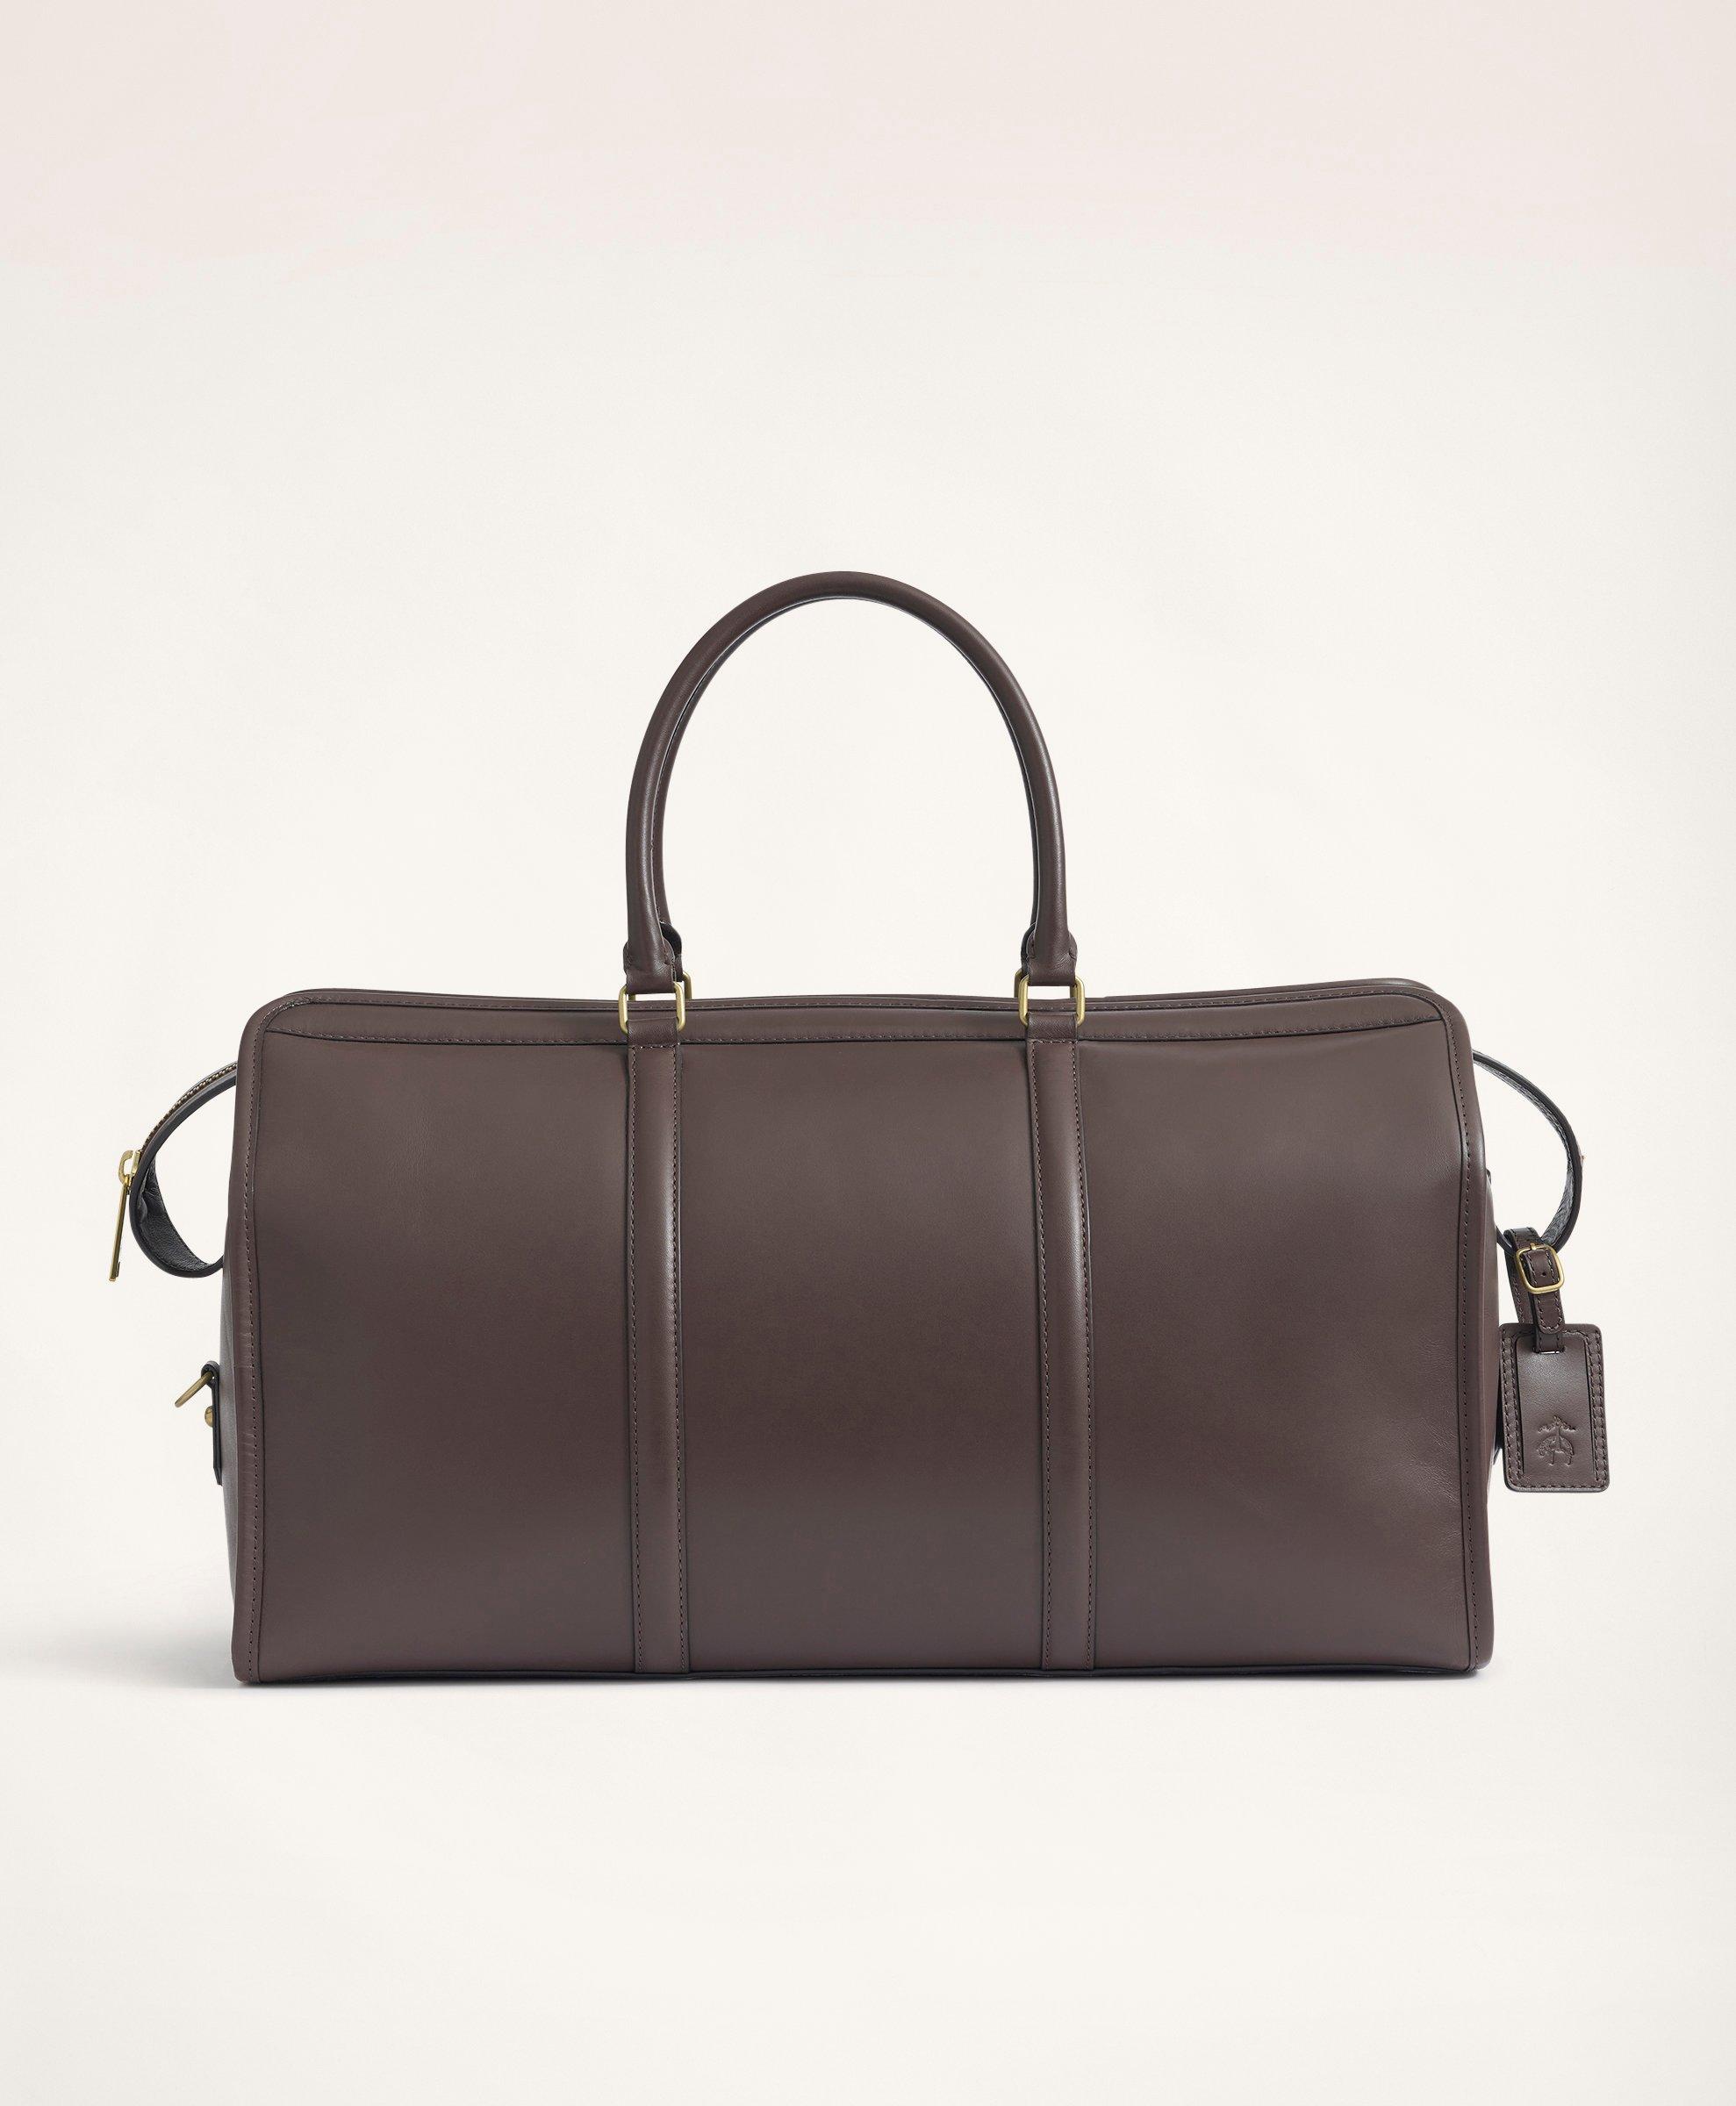 Brooks Brothers Genuine leather suitcase